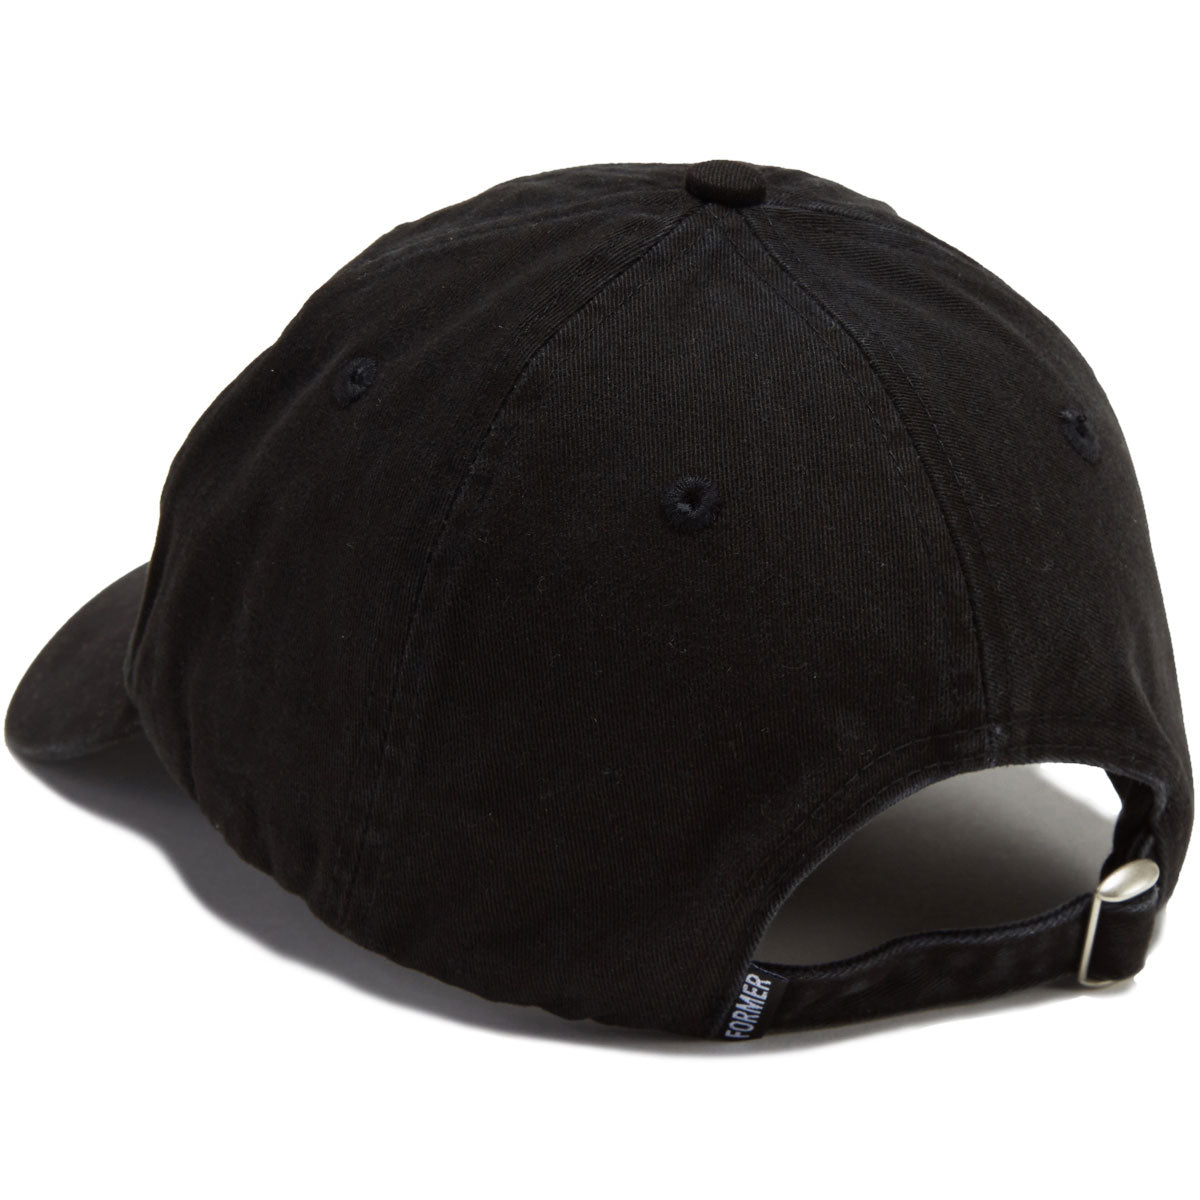 Former Wishing Hat - Black image 2